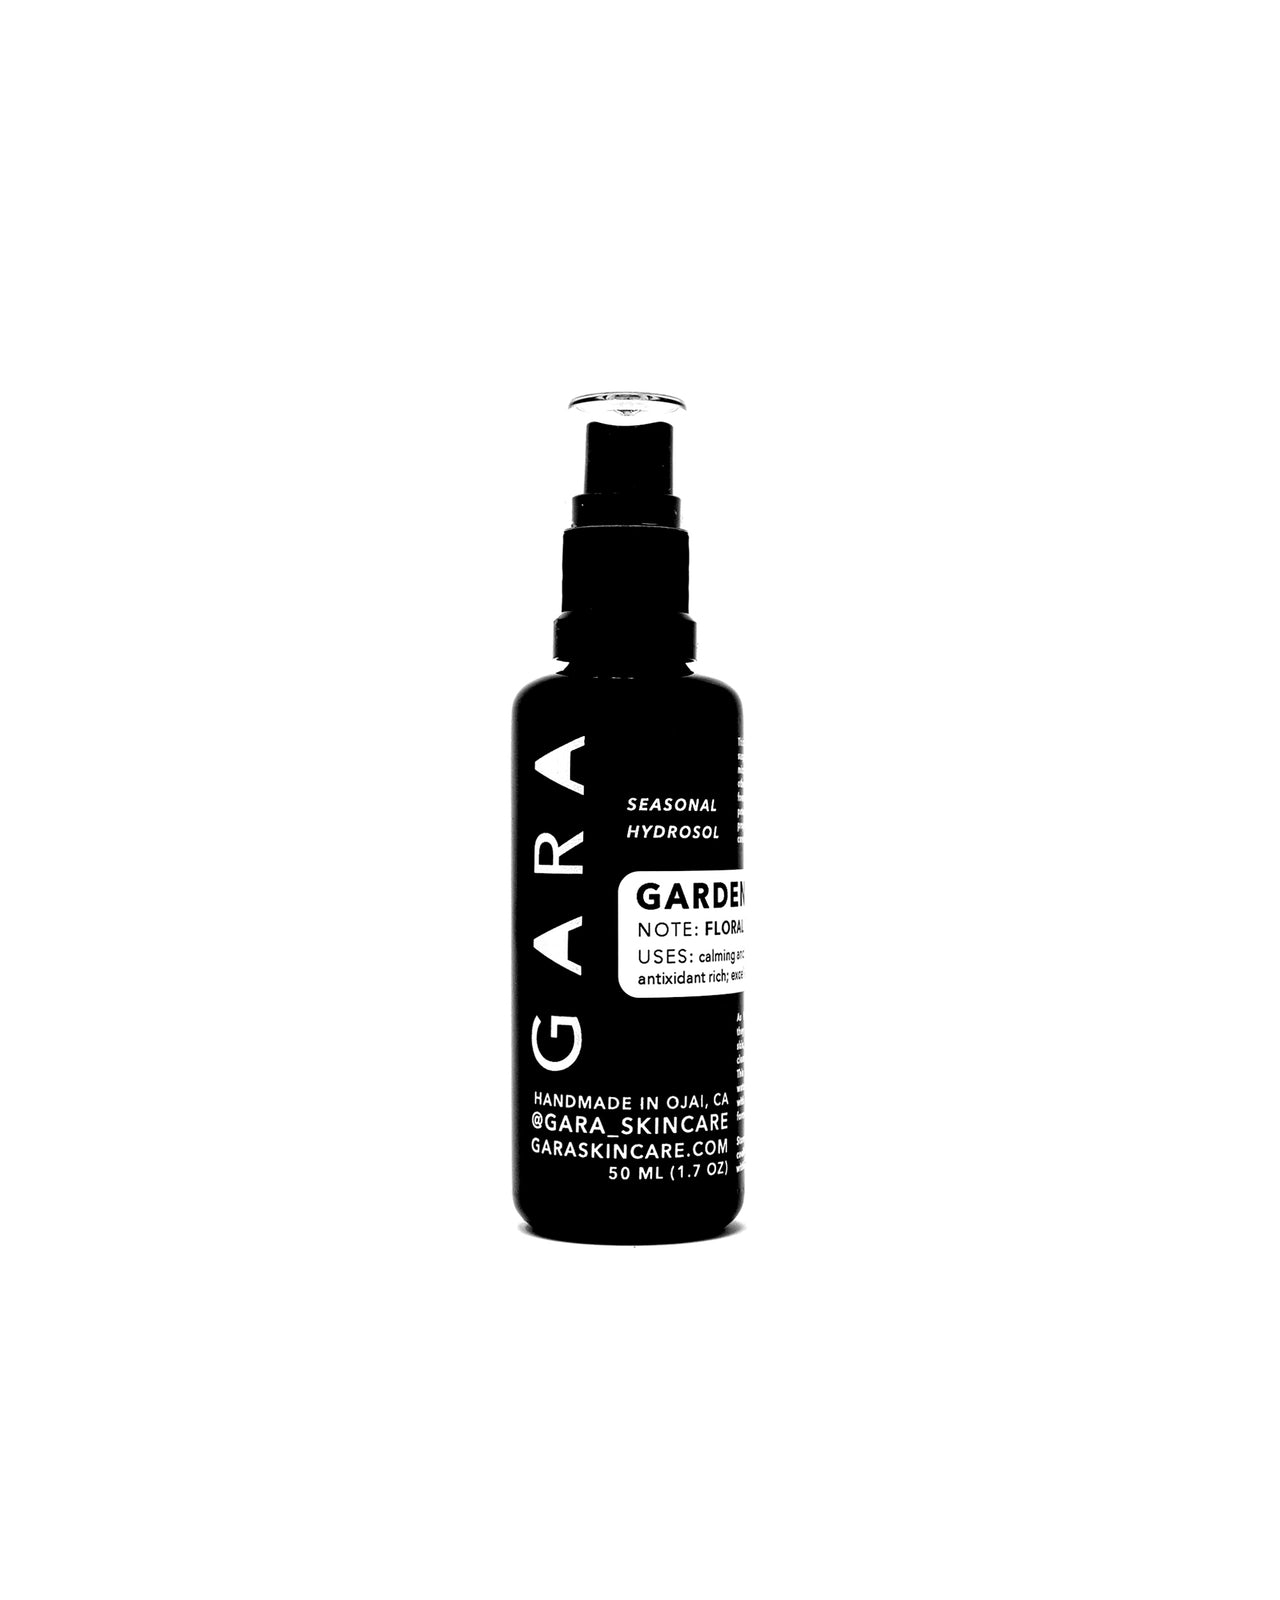 gara skincare gardenia hydrosol product image 1